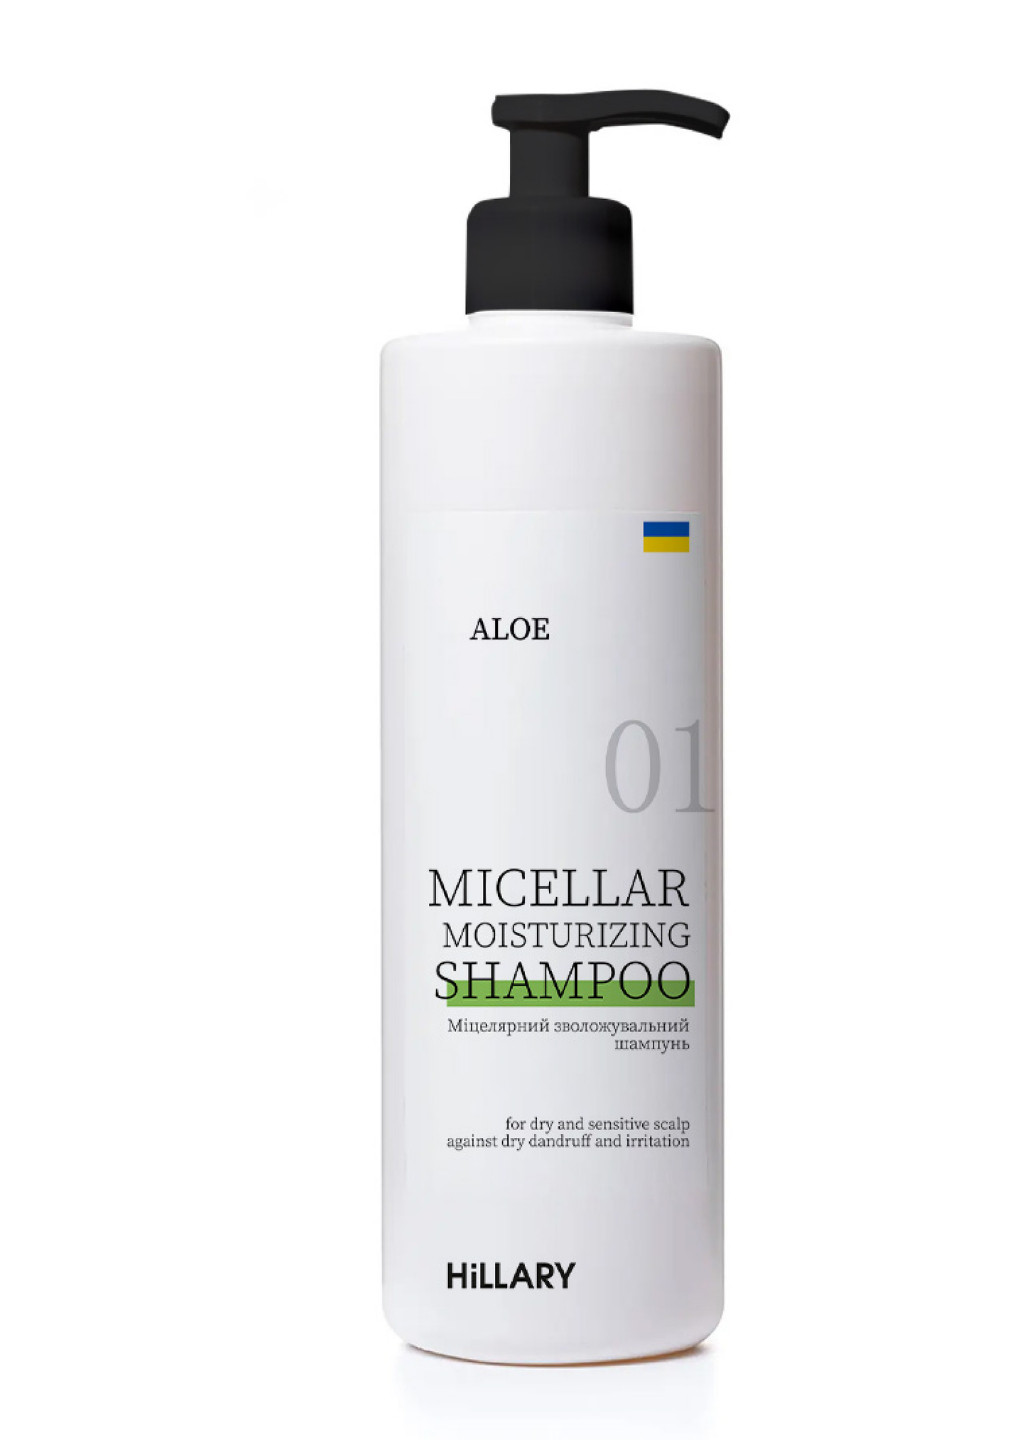 Міцелярний зволожувальний шампунь Aloe Aloe Micellar Moisturizing Shampoo, 500 мл Hillary (257377738)